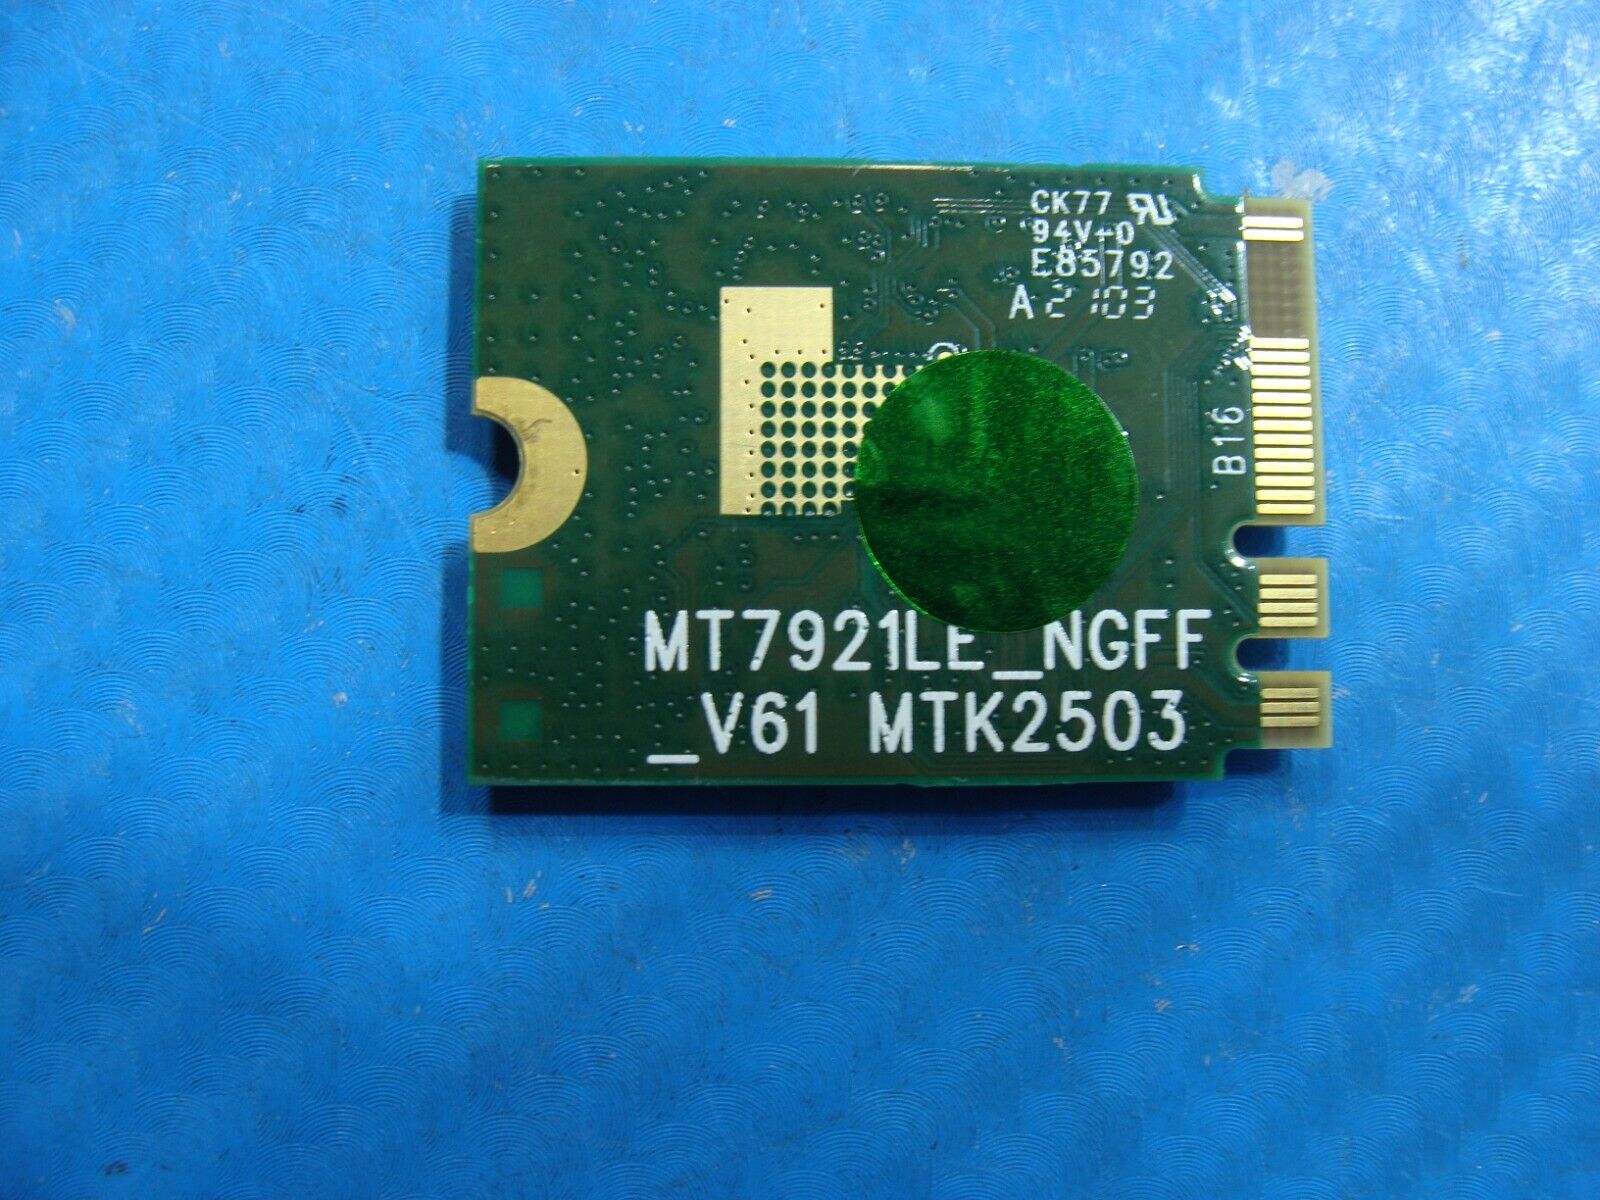 Asus ROG Zephyrus G14 14” GA401QH OEM Wireless WiFi Bluetooth Card AW-XB468NF